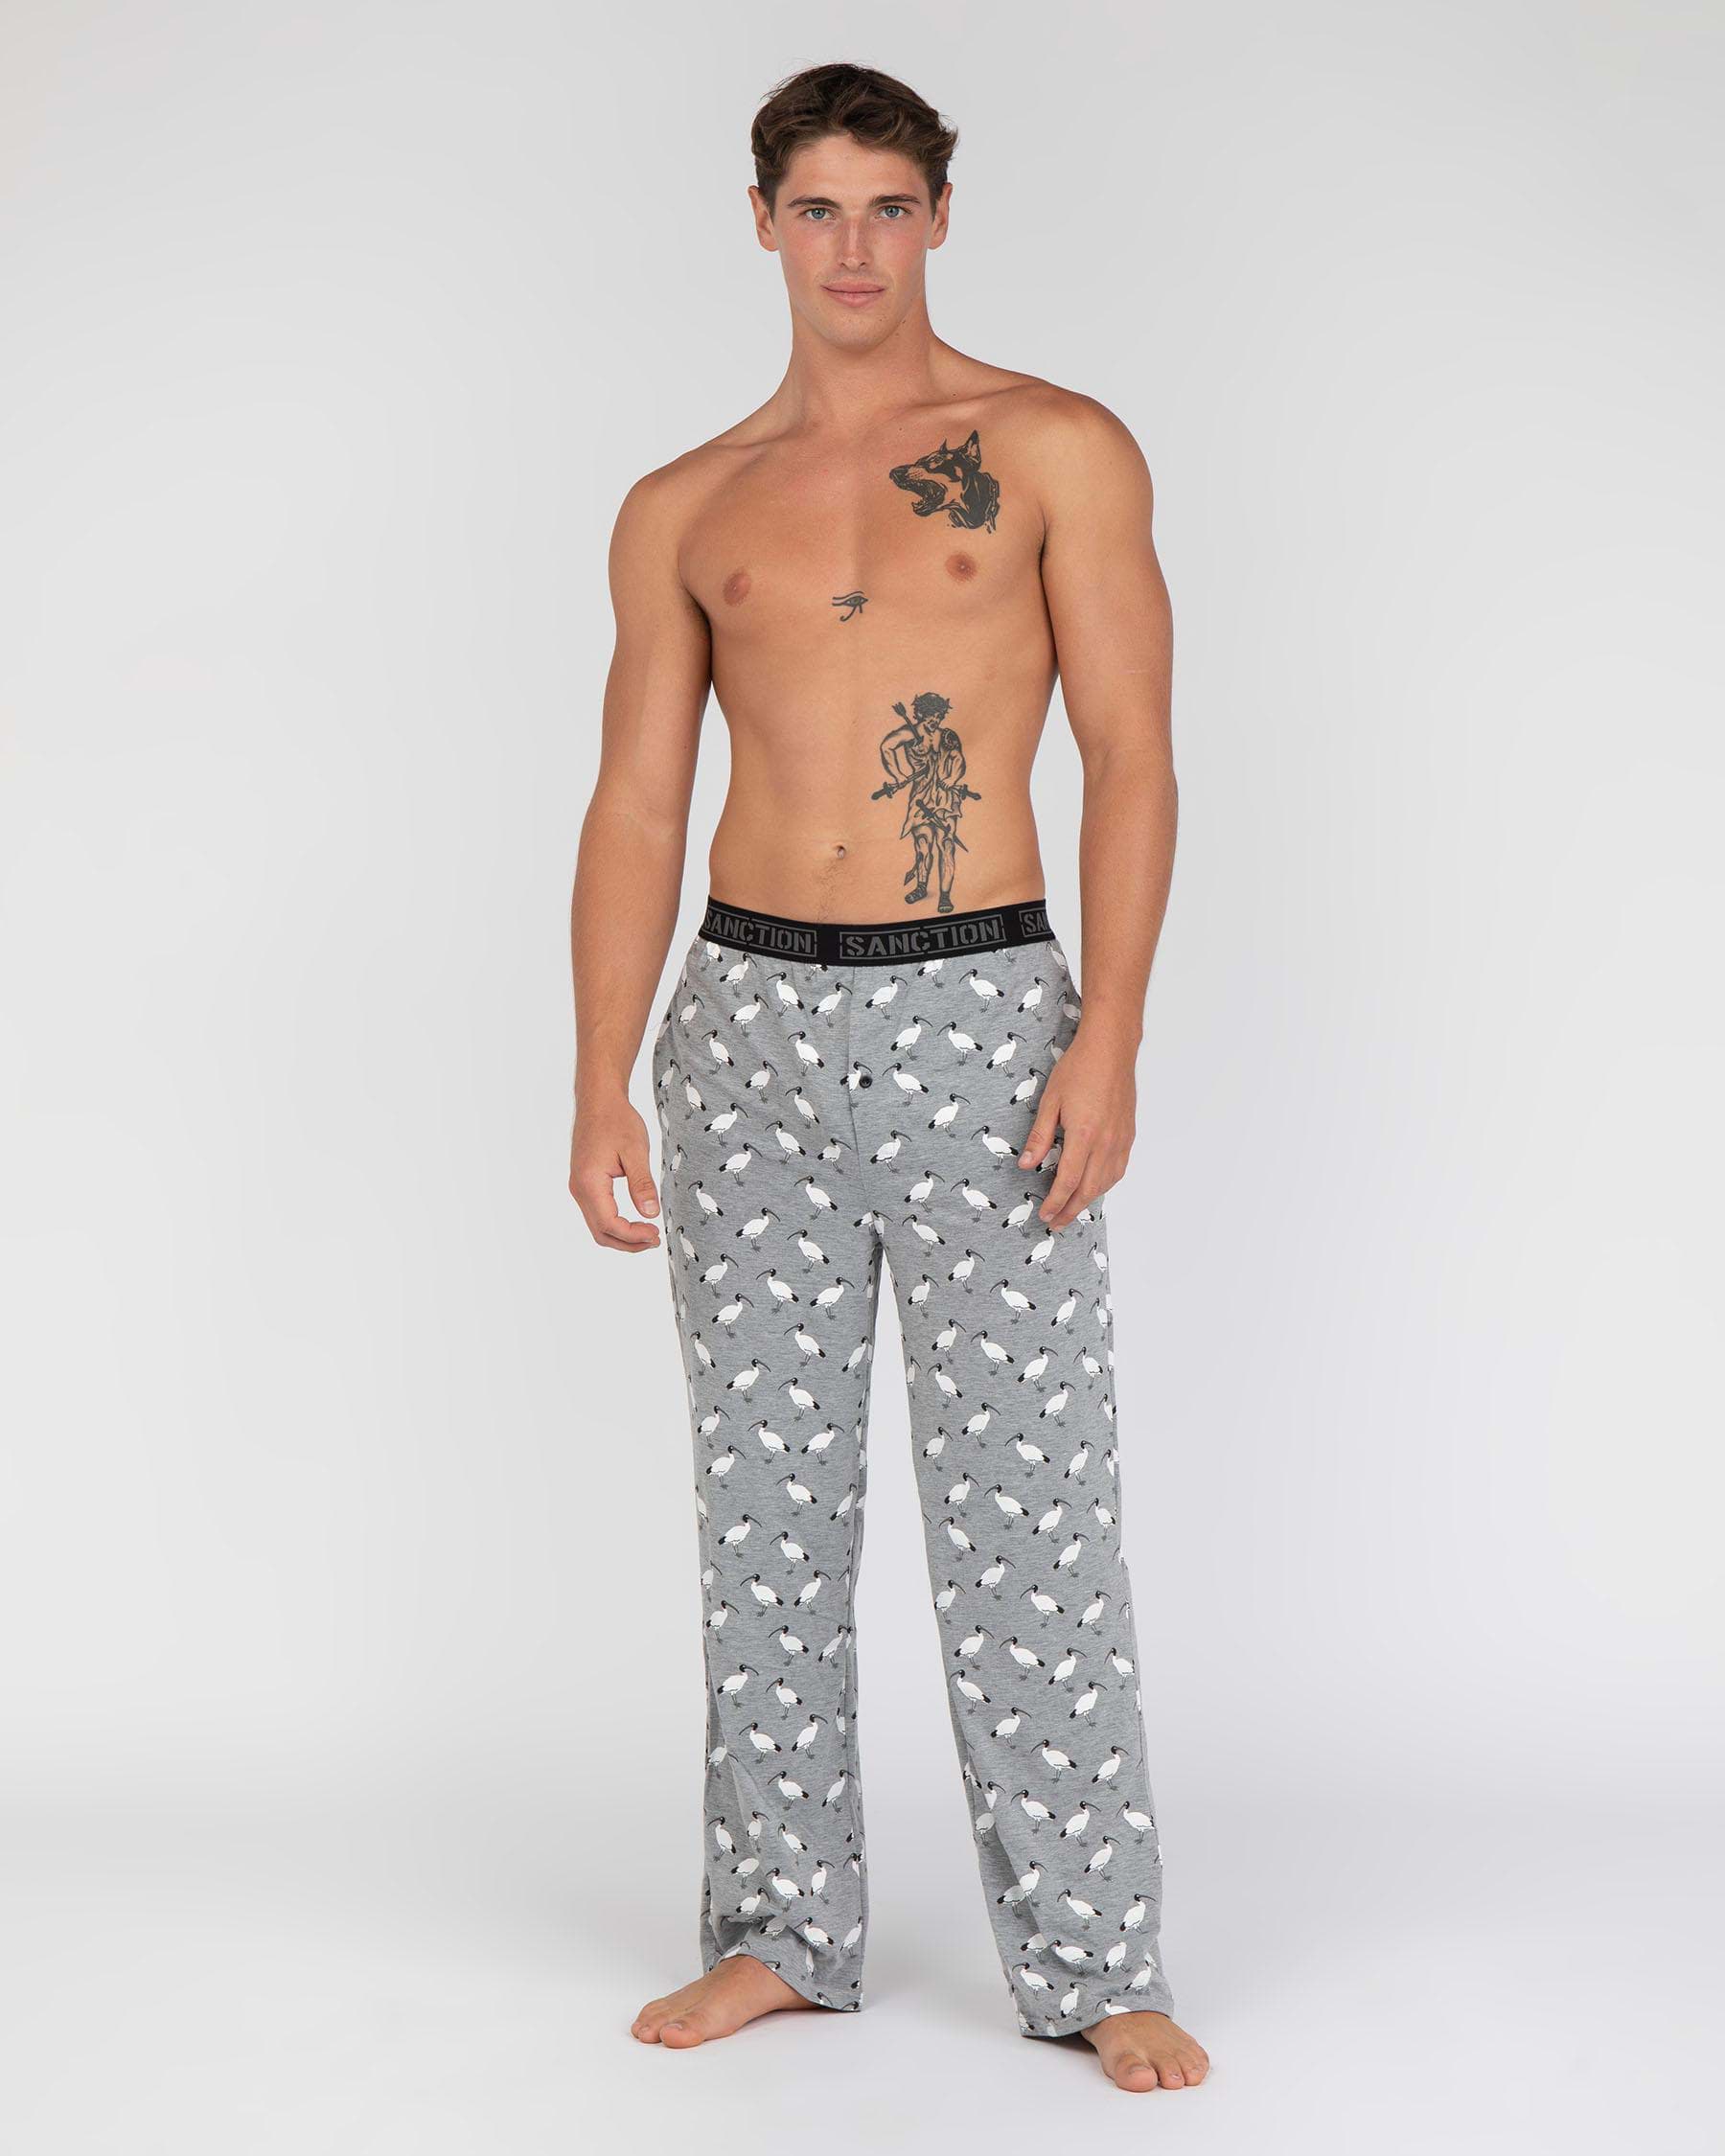 Sanction Bin Chicken Pyjama Pants In Grey City Beach Australia